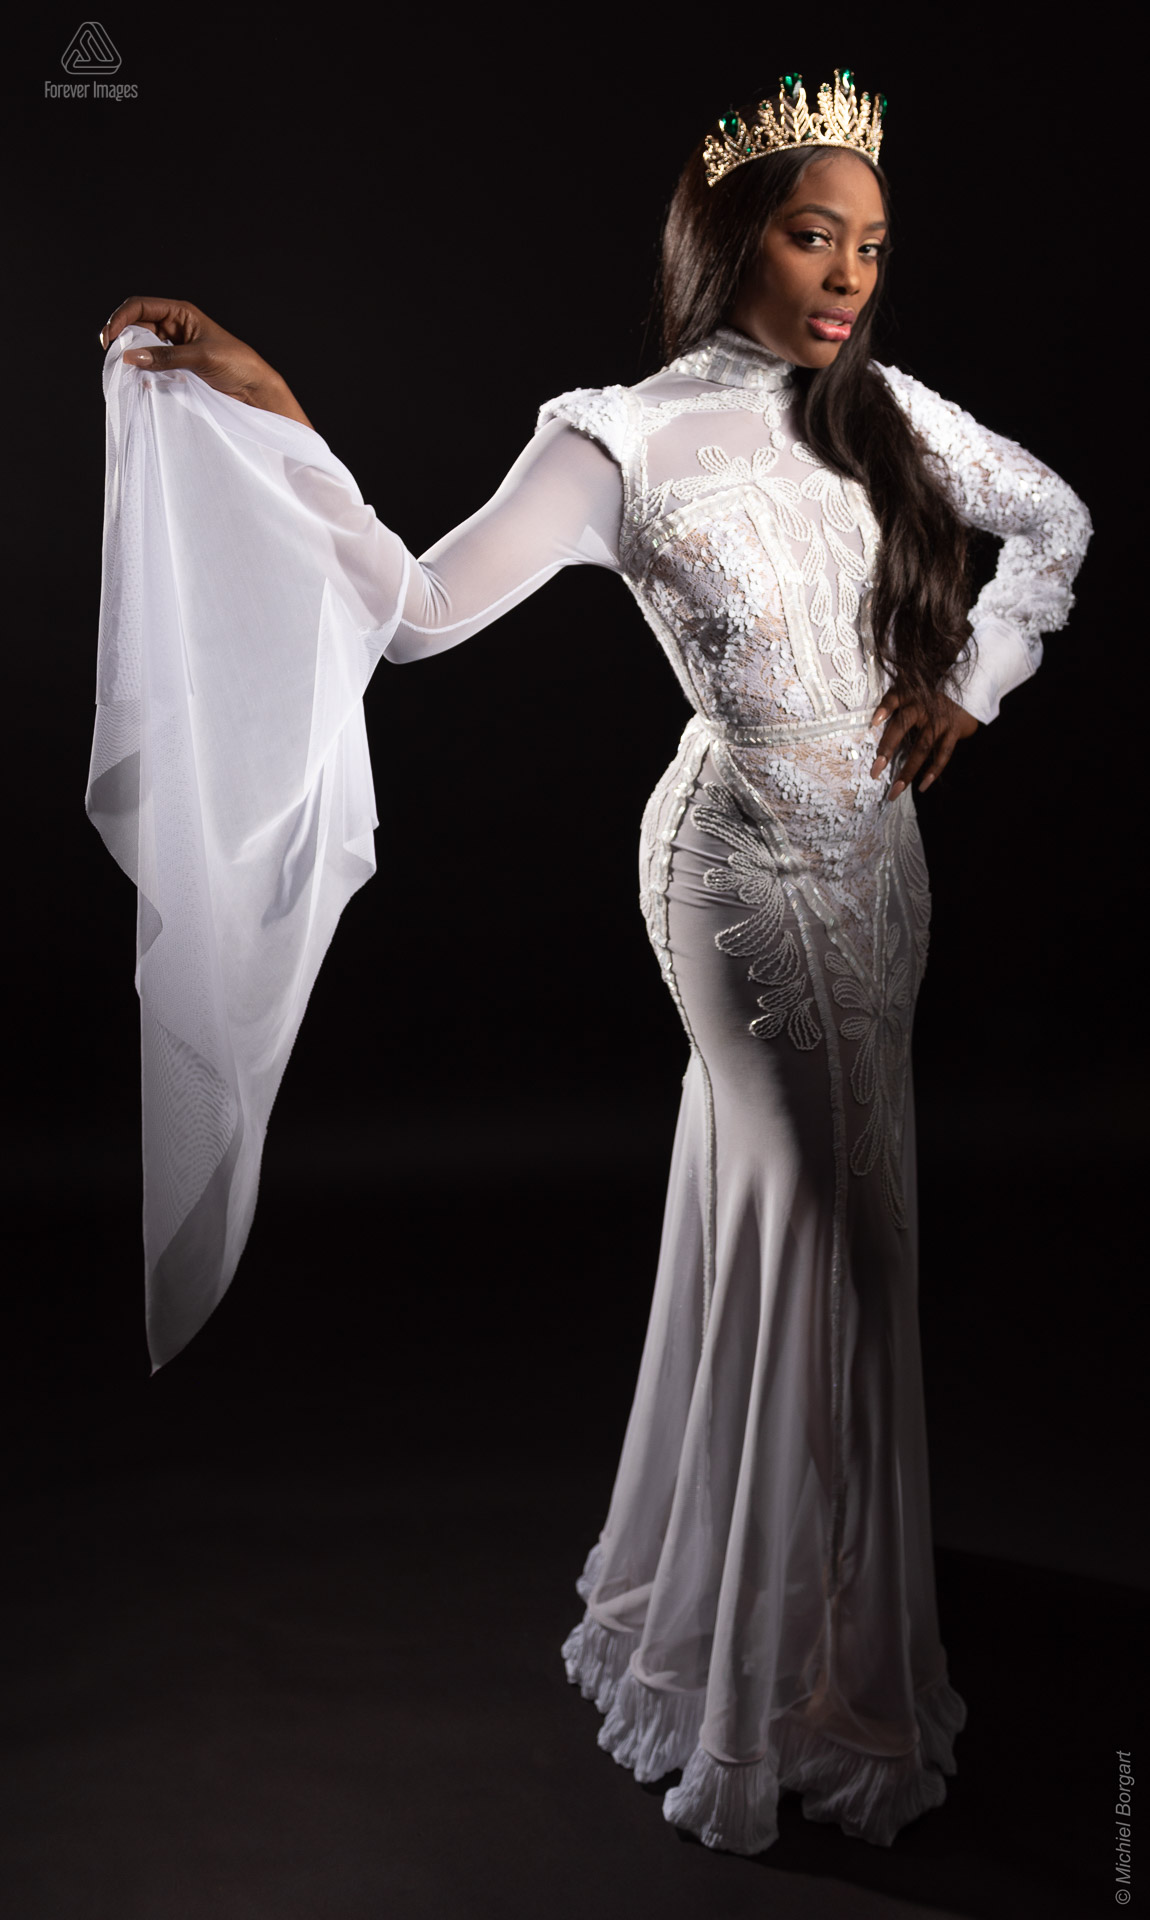 Fashionfoto witte jurk totaal kroon hand op zij | Mariana Pietersz Miss Avantgarde Ronald Rizzo Piu Colore | Fashionfotograaf Michiel Borgart - Forever Images.